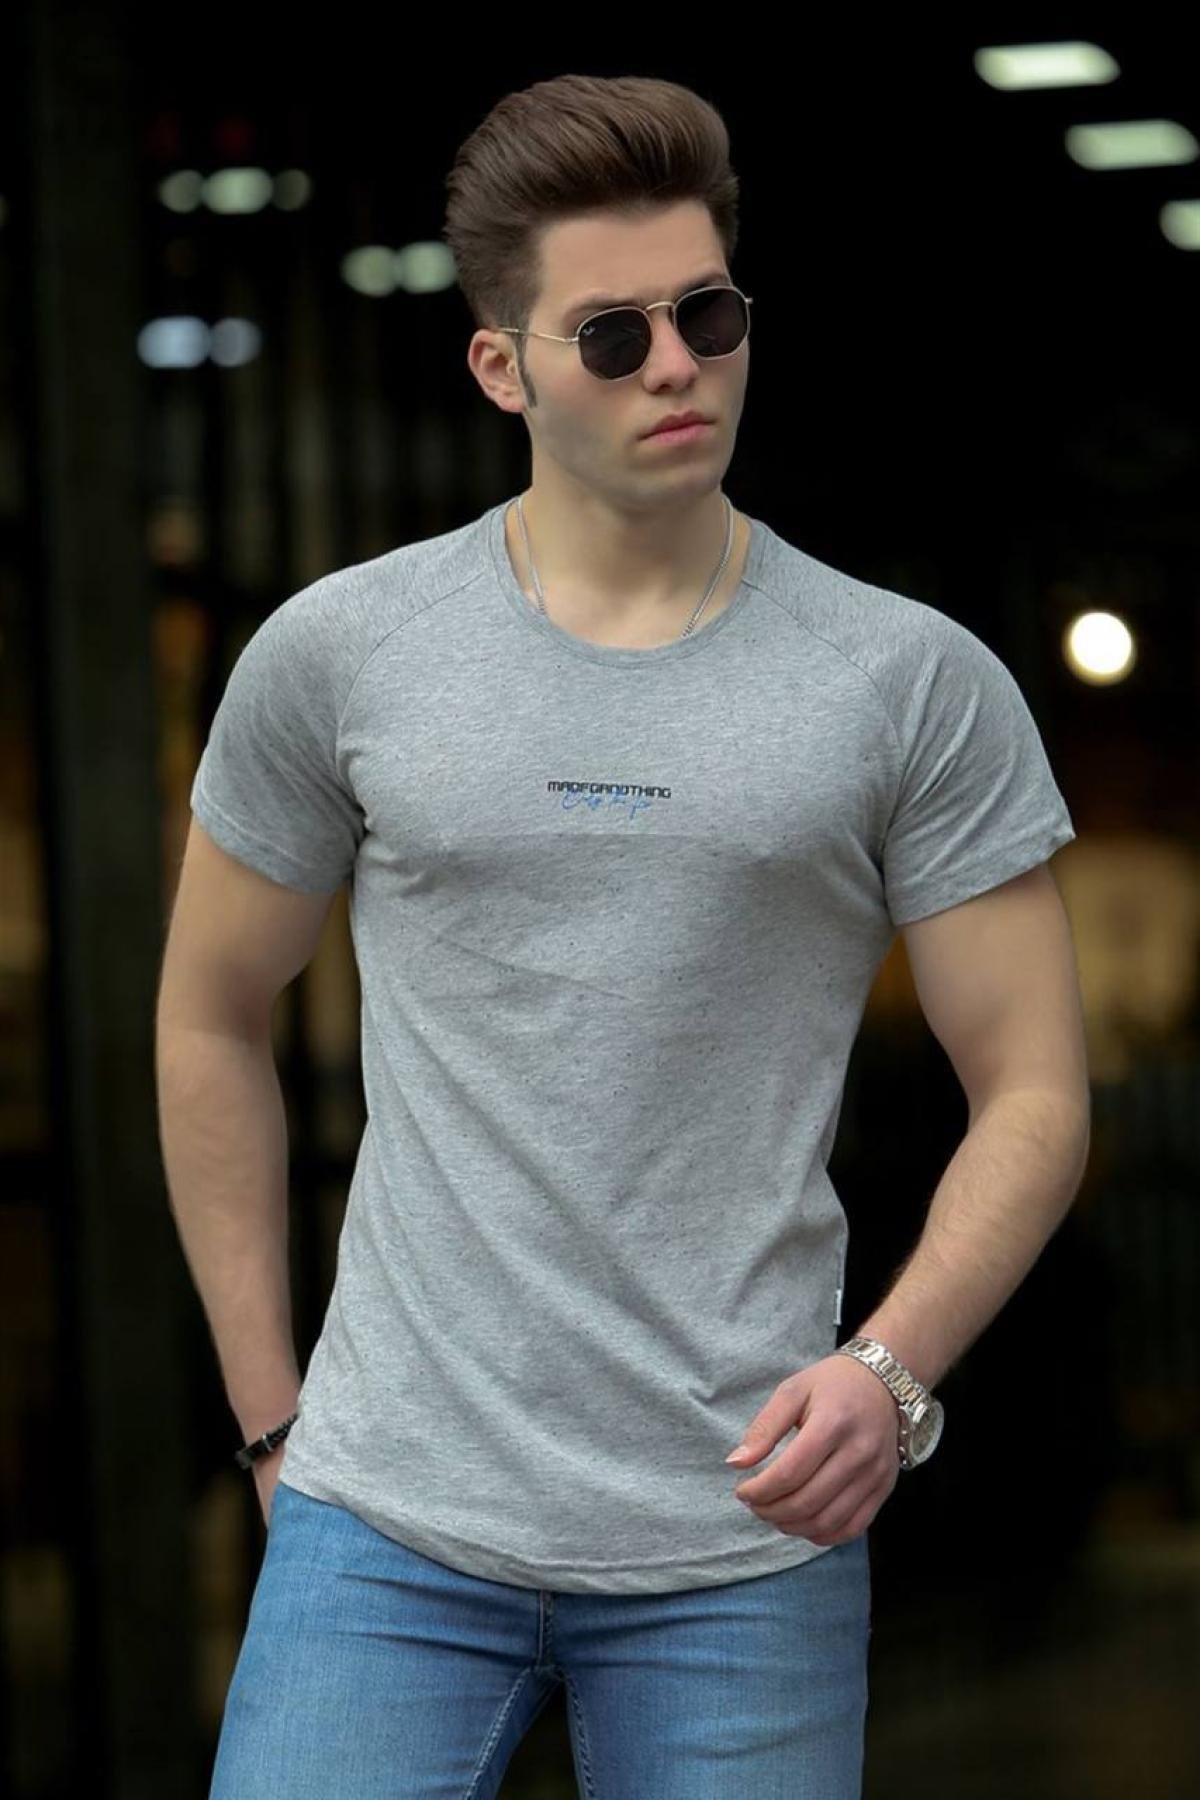 Raglan-sleeve printed T-shirt